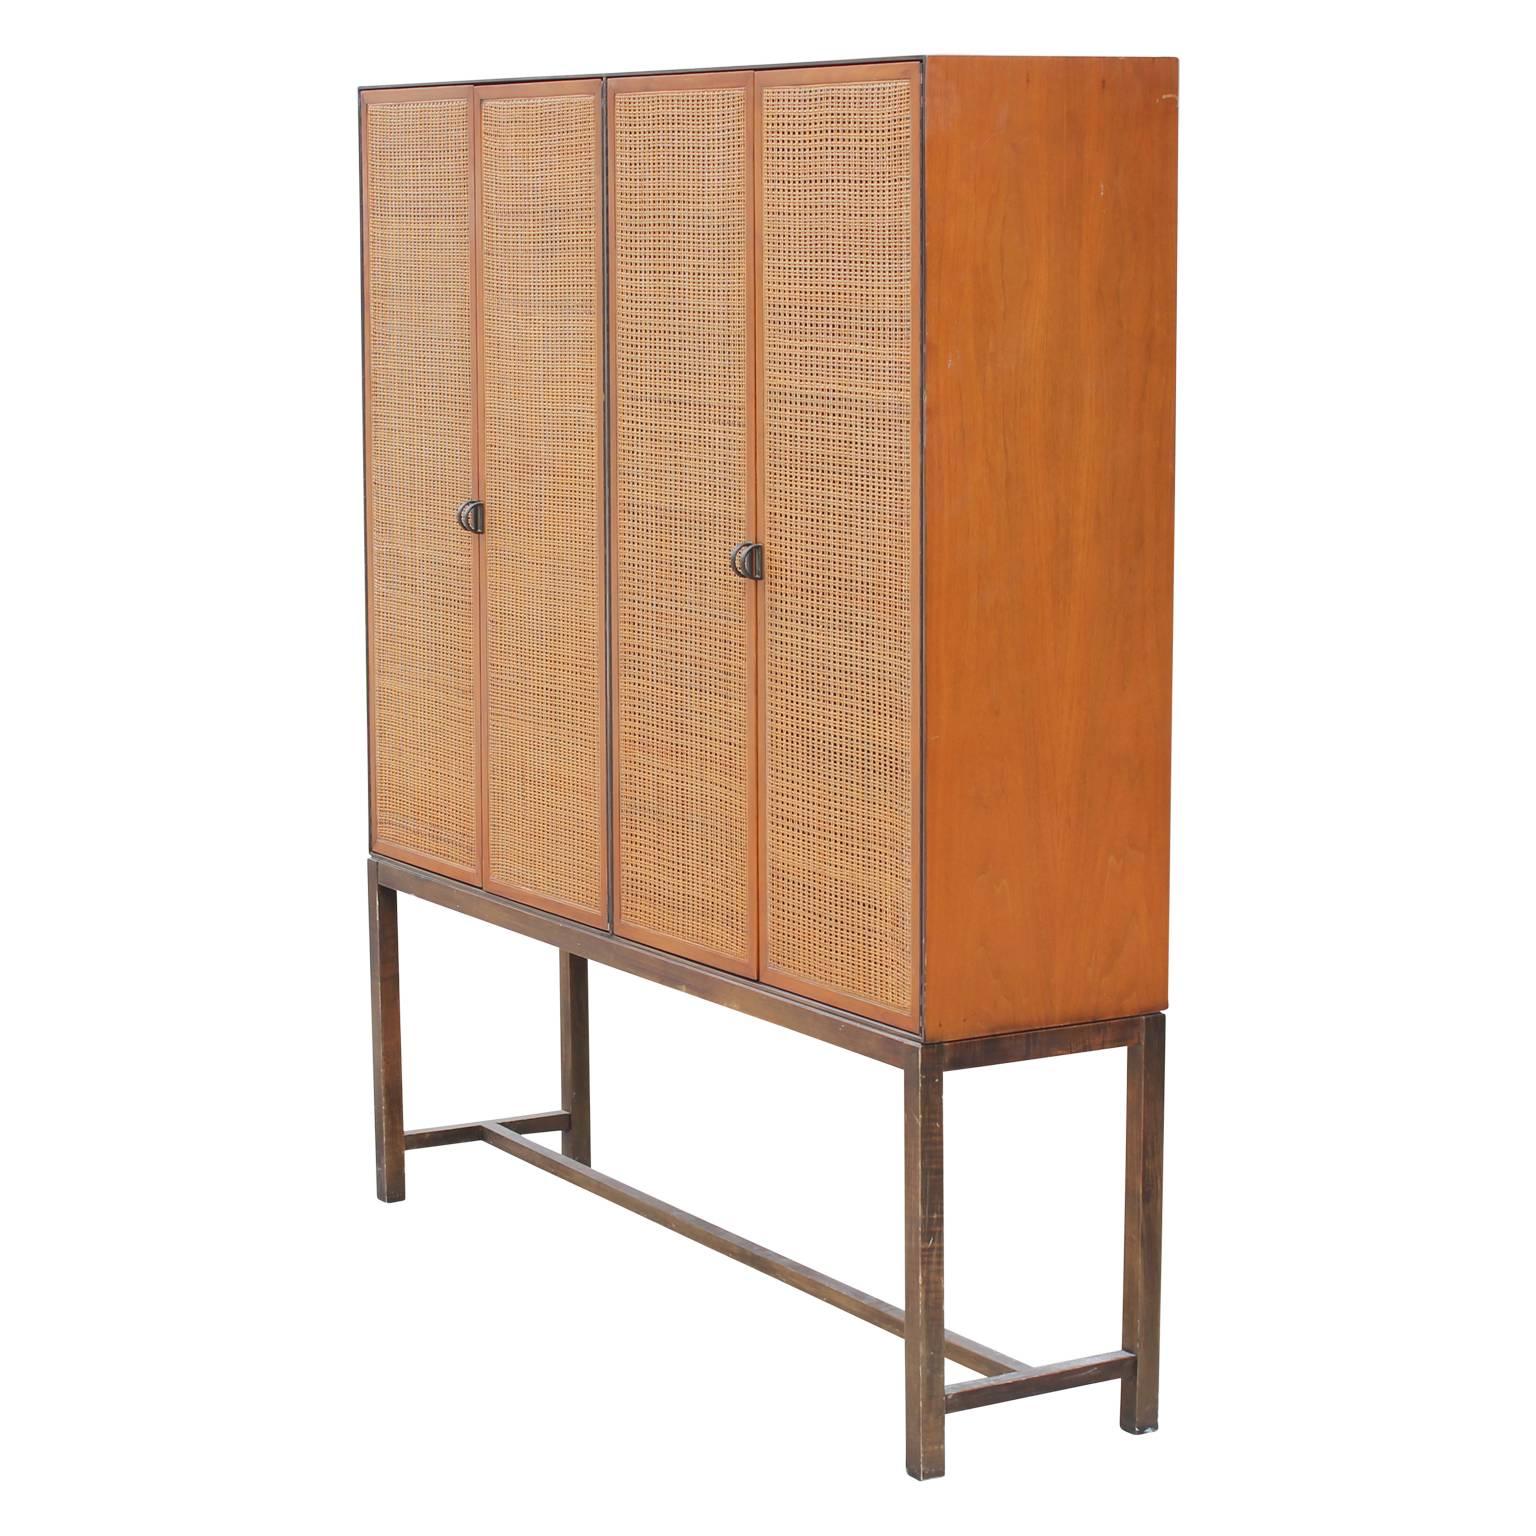 American Impressive Modern Directional / Calvin Furniture Cane Cabinet or Wardrobe